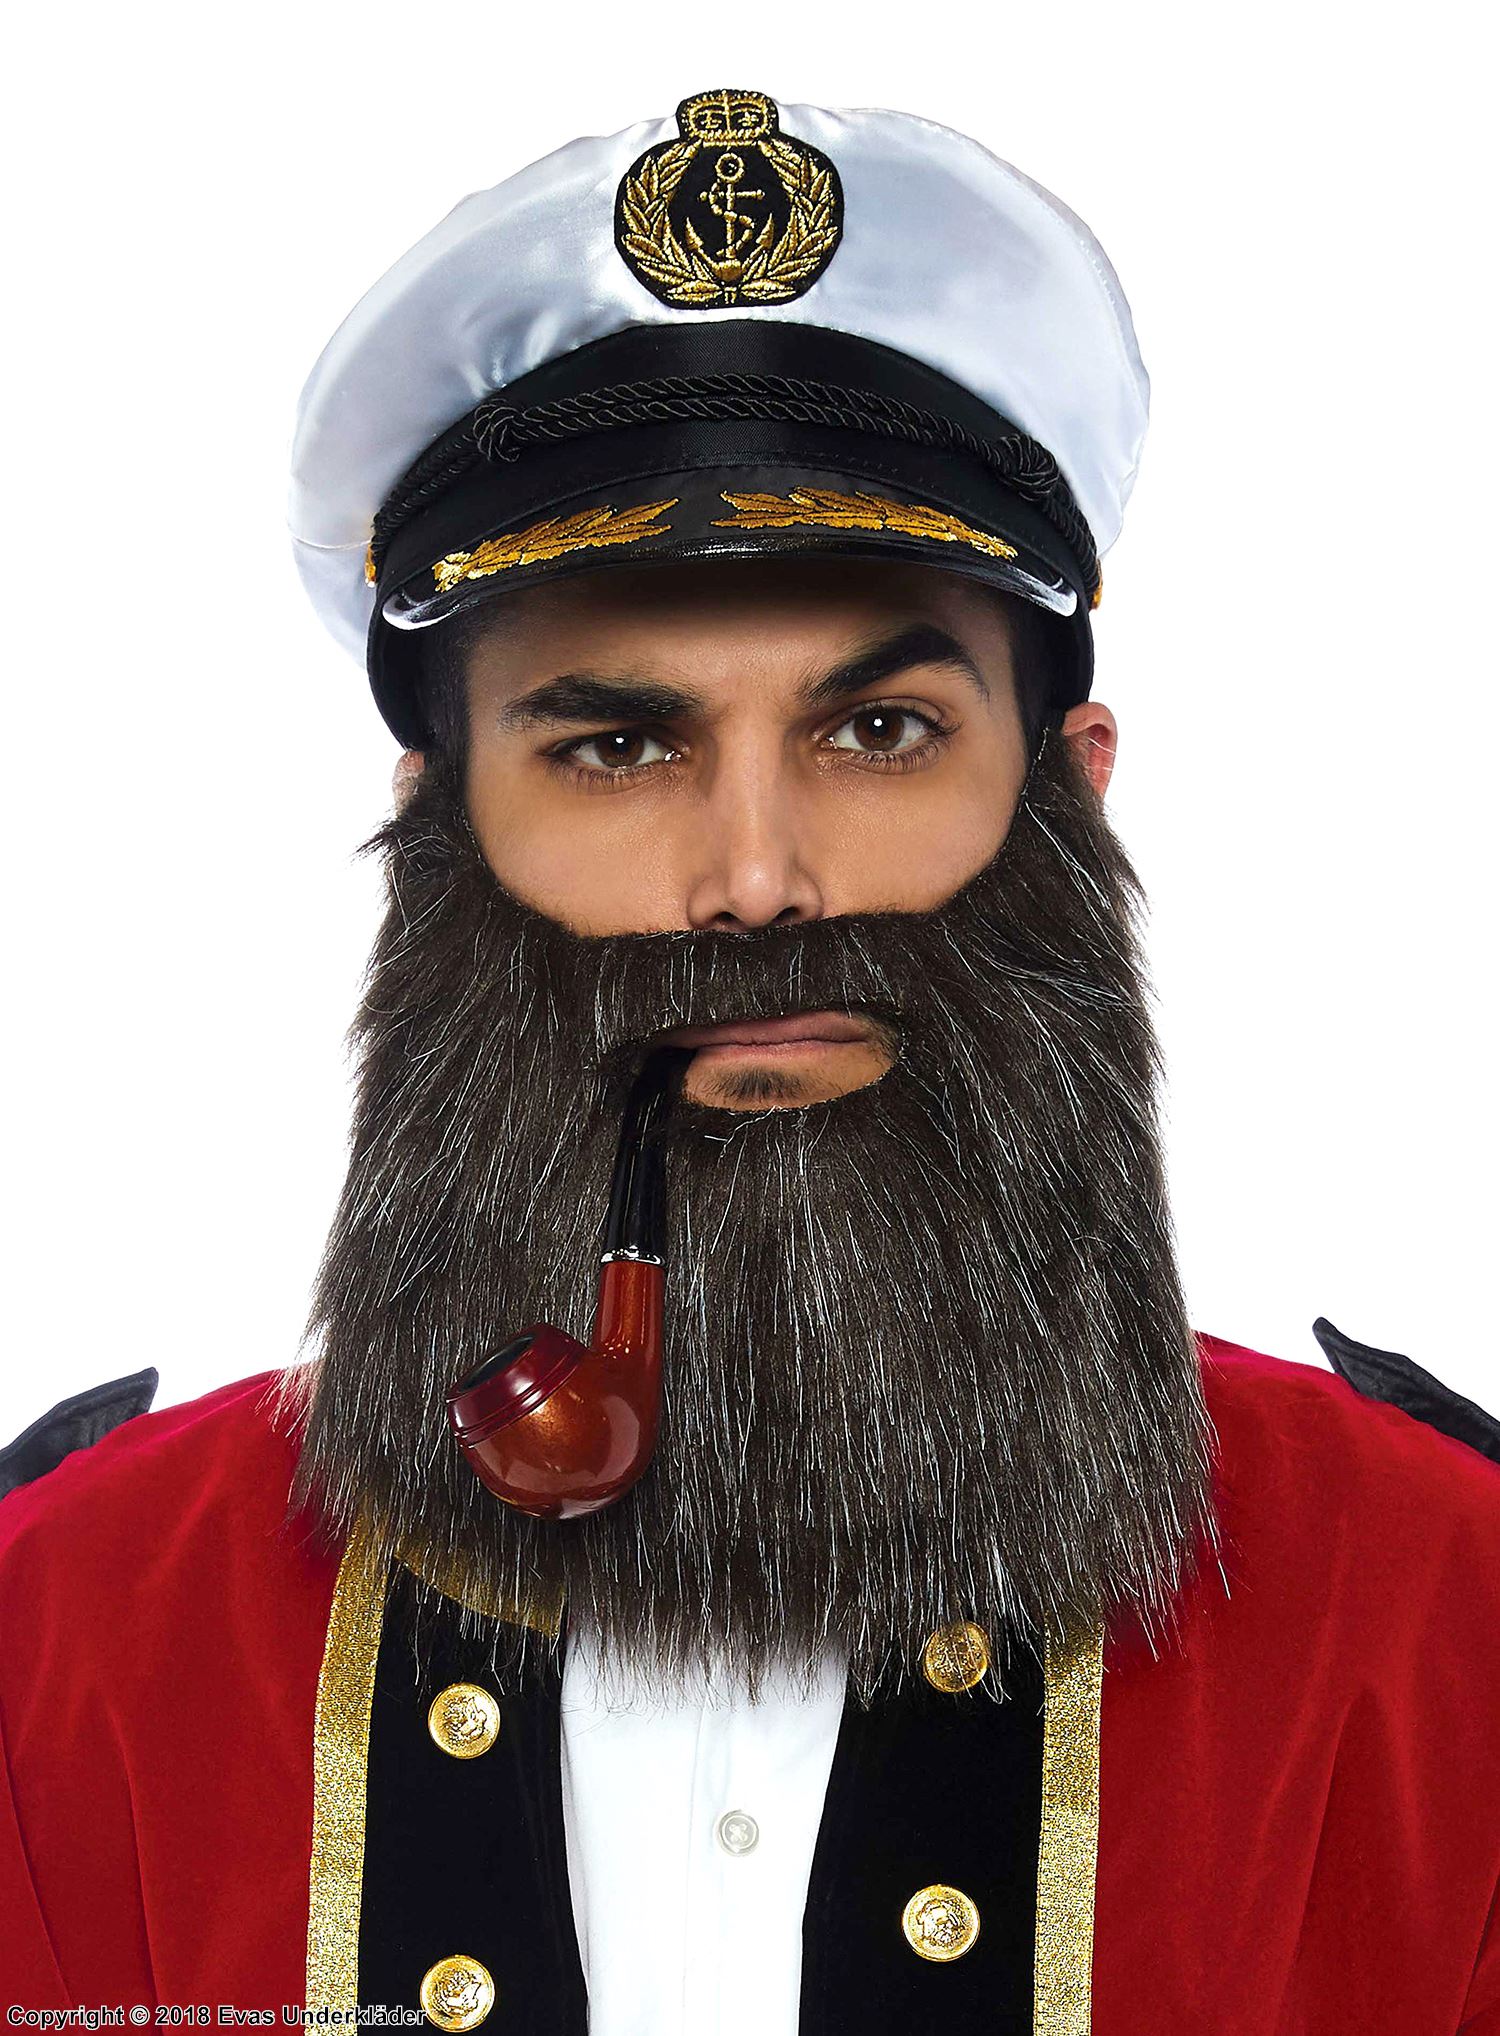 Ship captain, costume set